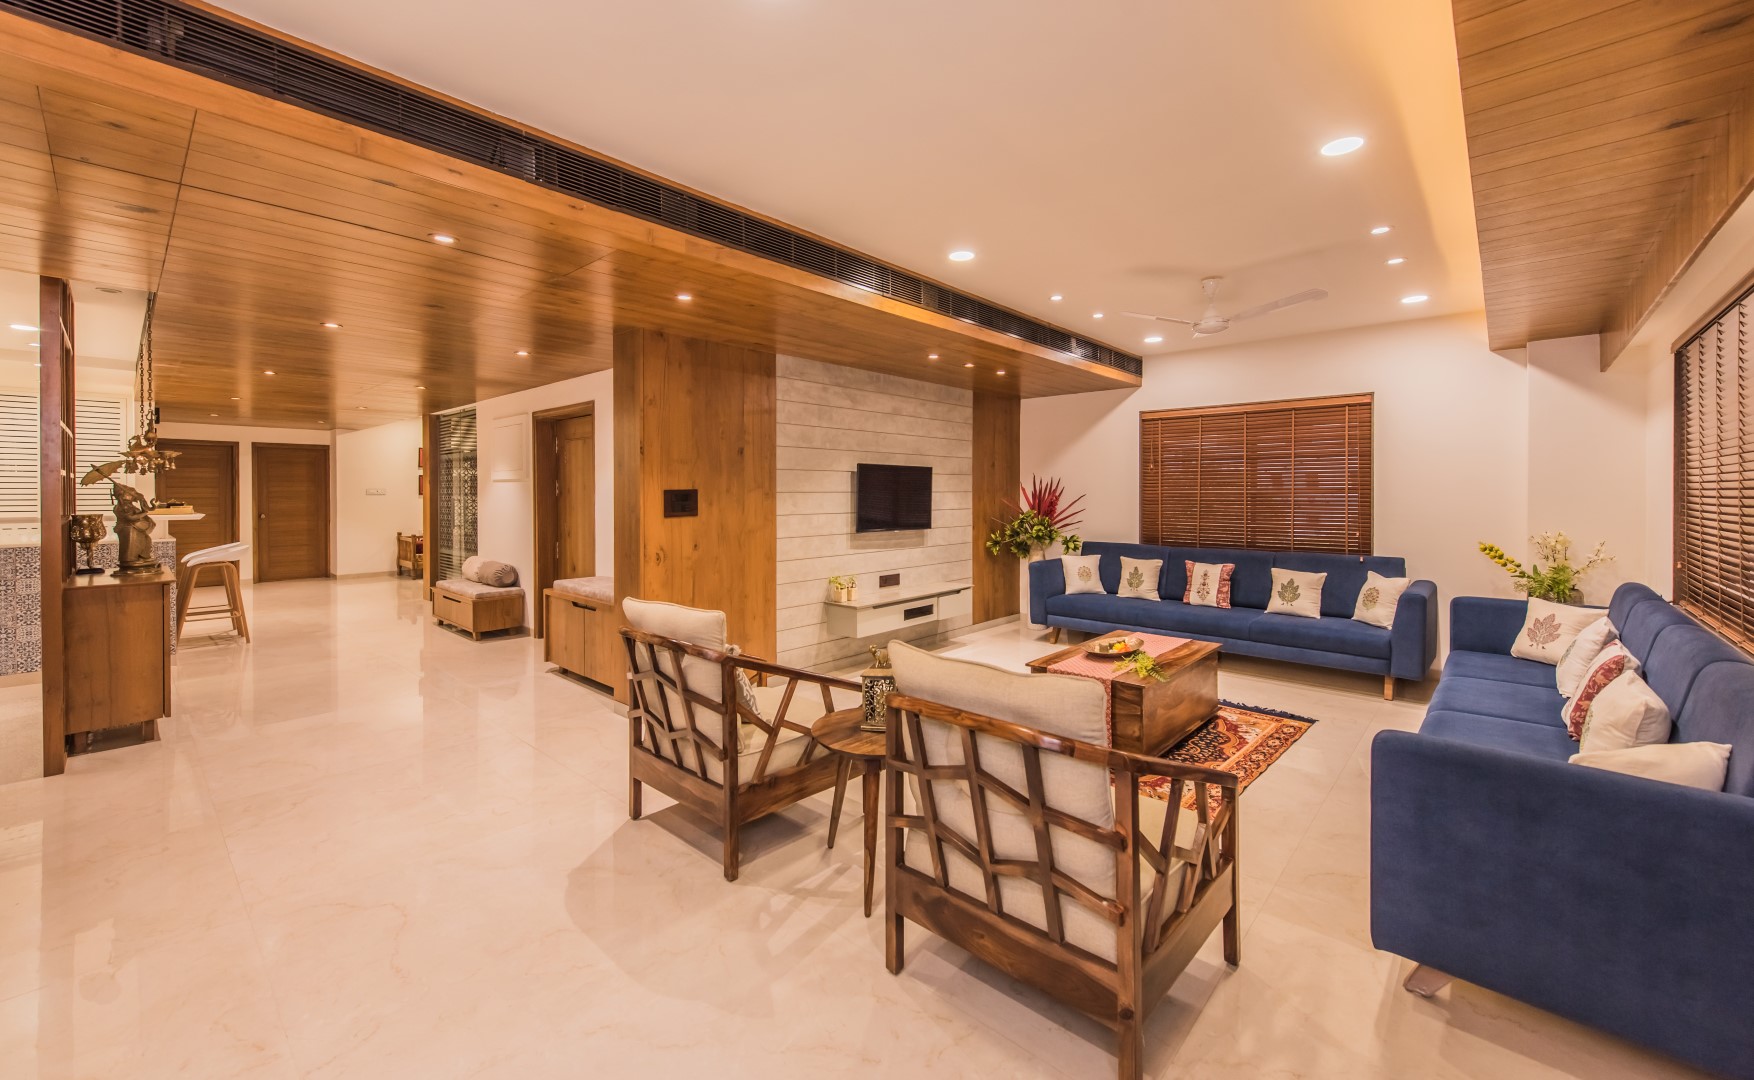 Contemporary Indian Style Apartment Interiors | MS Design Studio - The